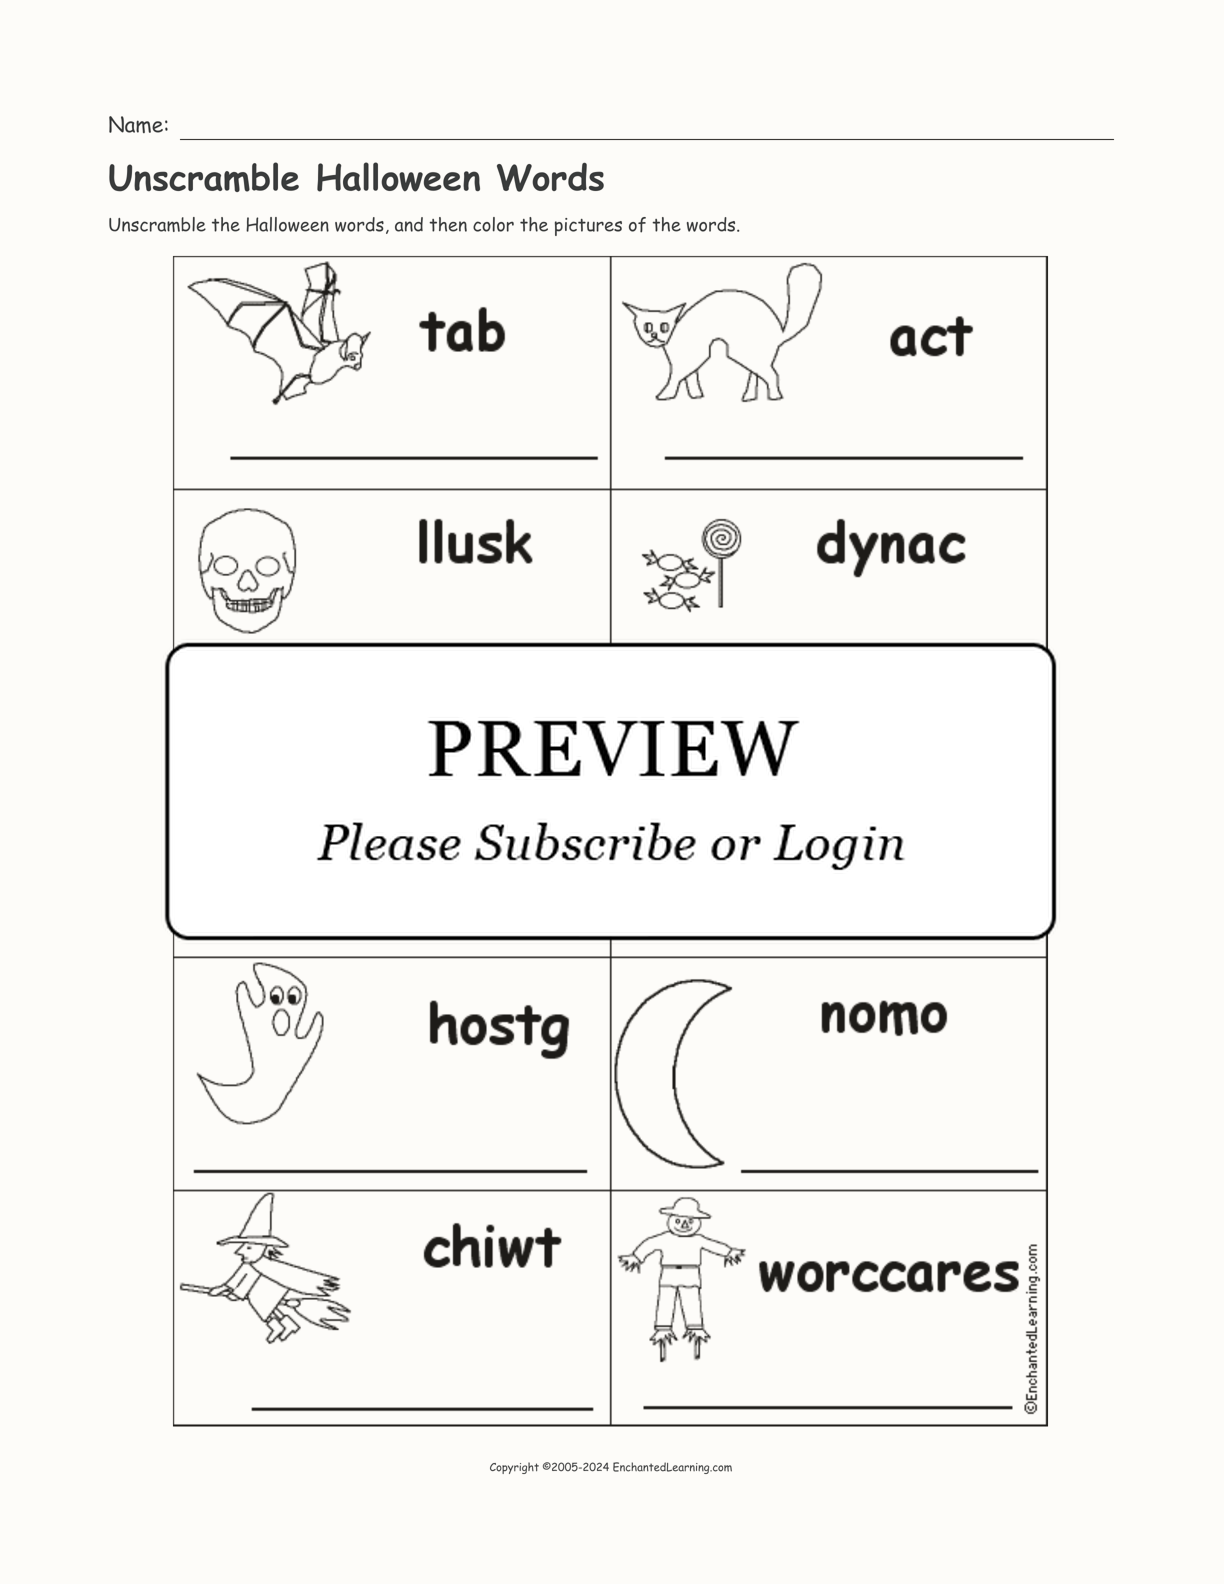 Unscramble Halloween Words interactive worksheet page 1